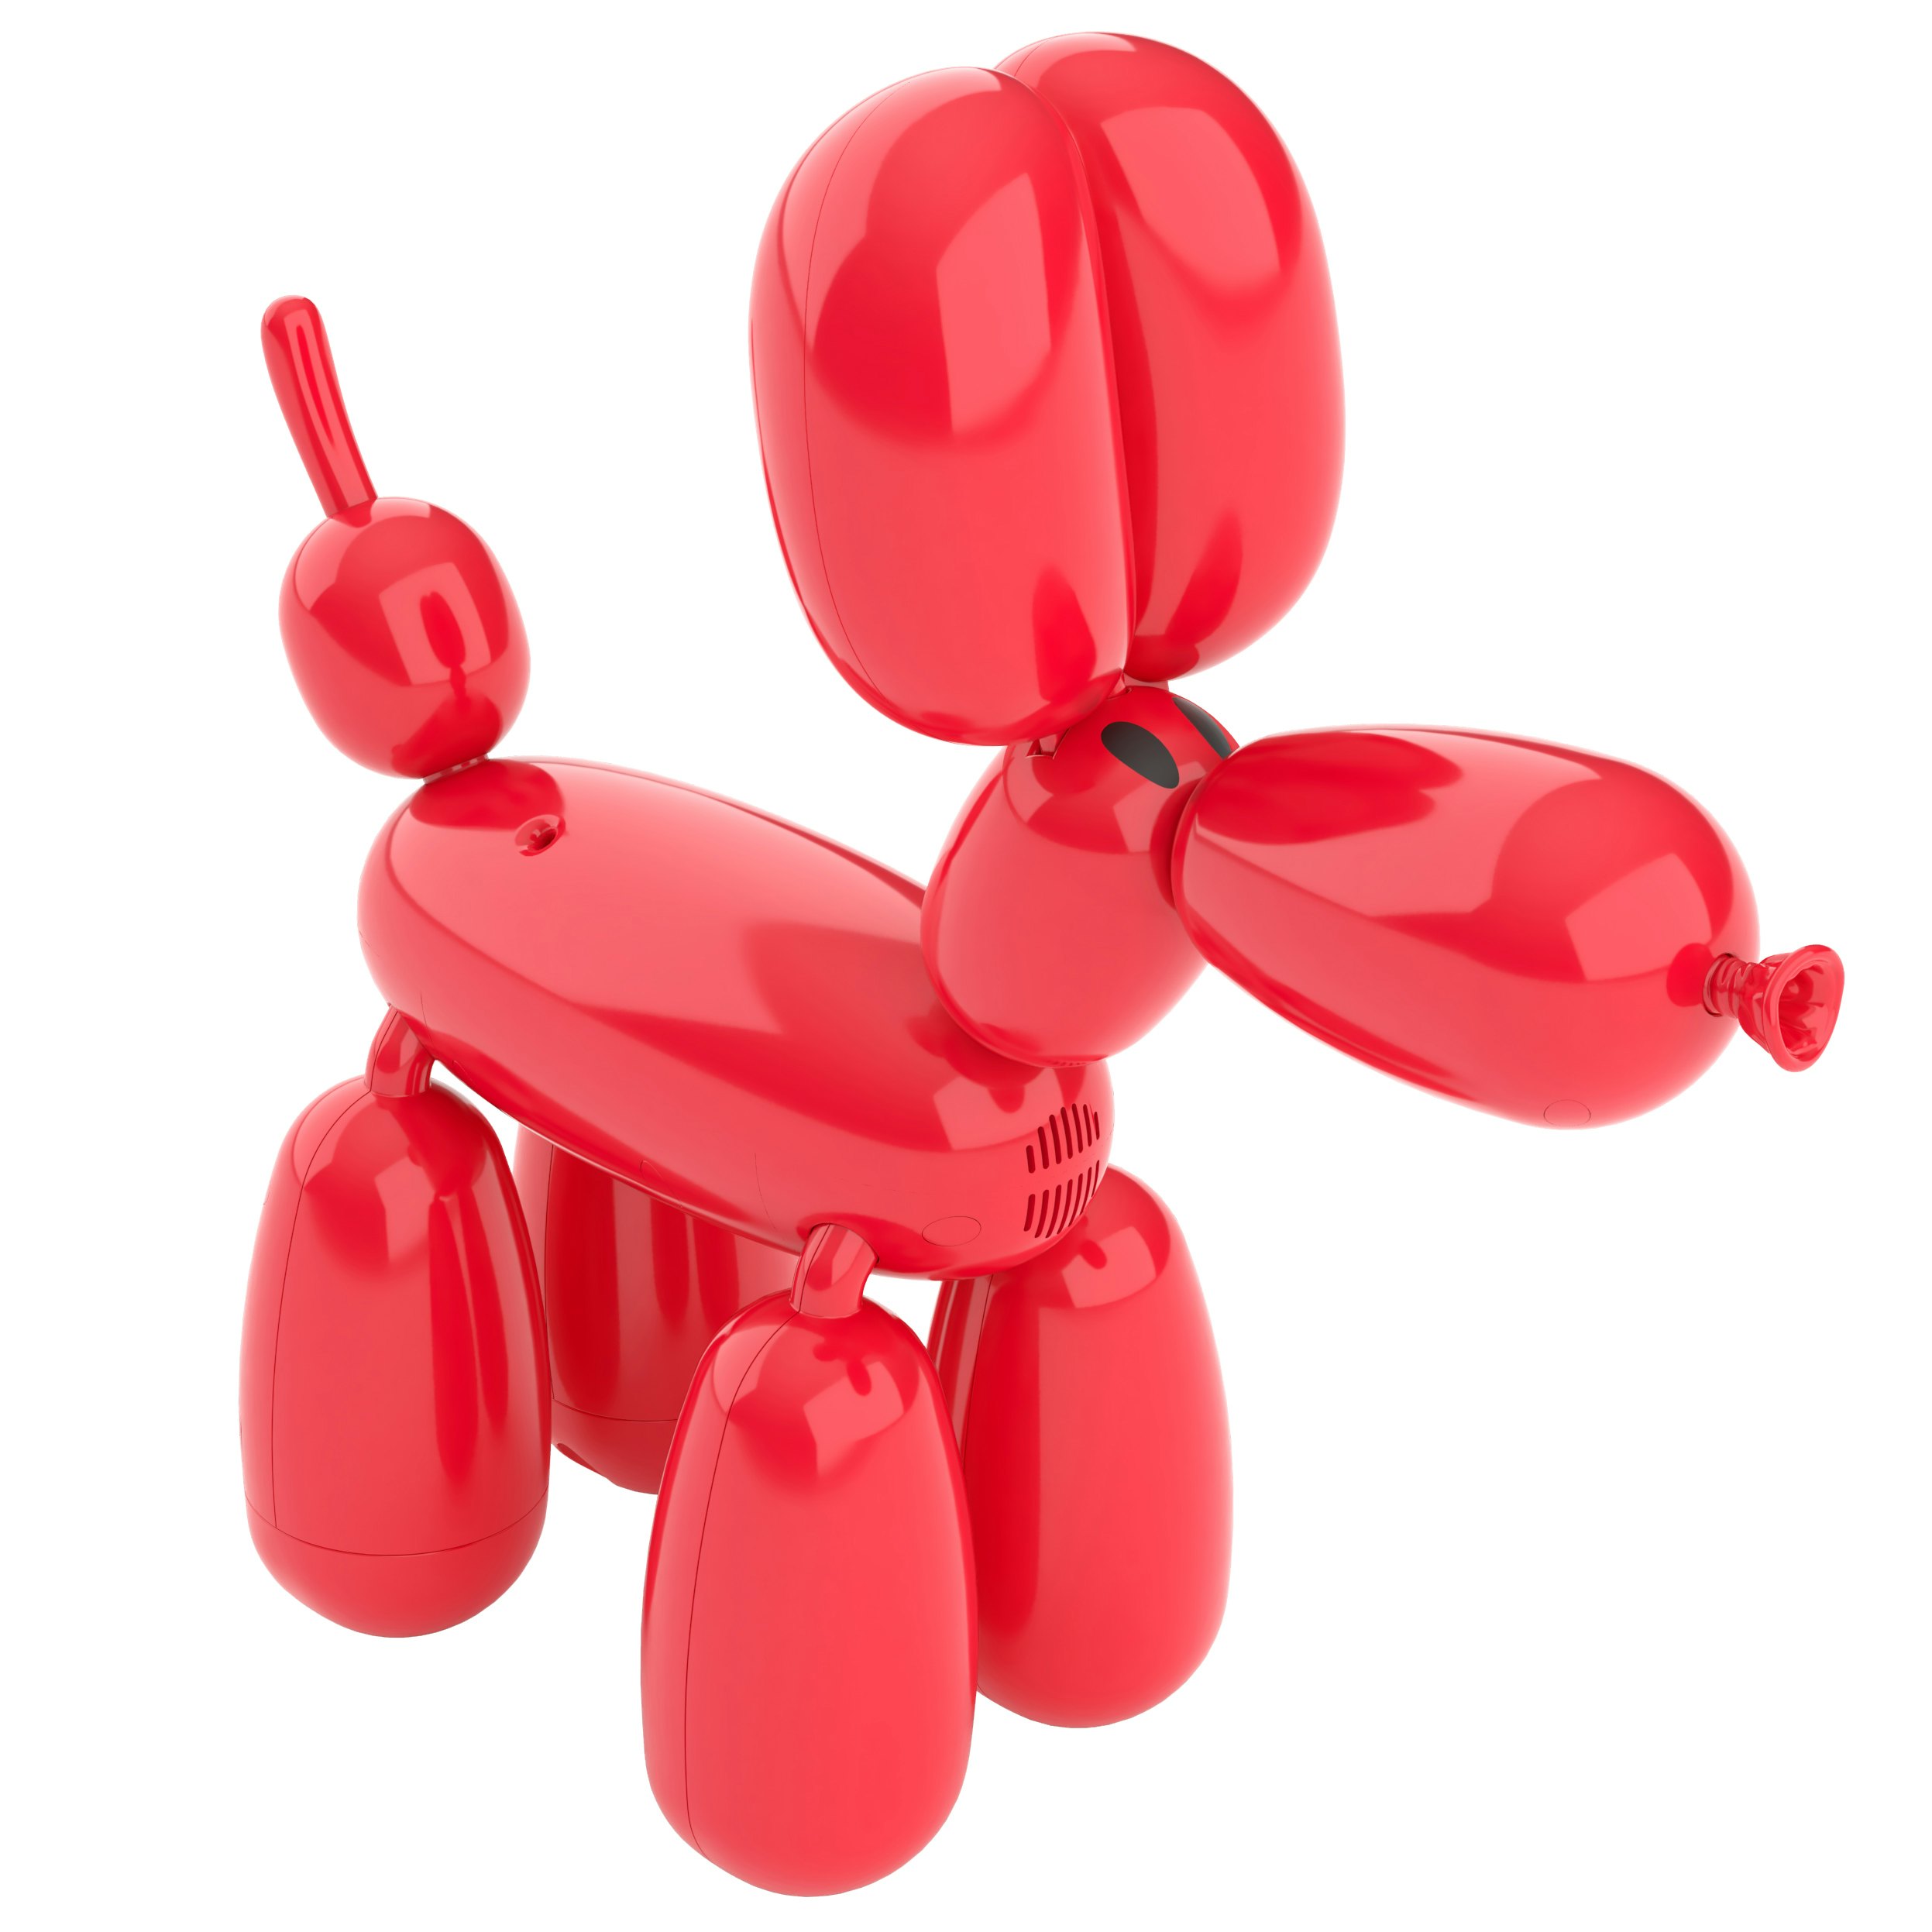 balloon animal dog toy